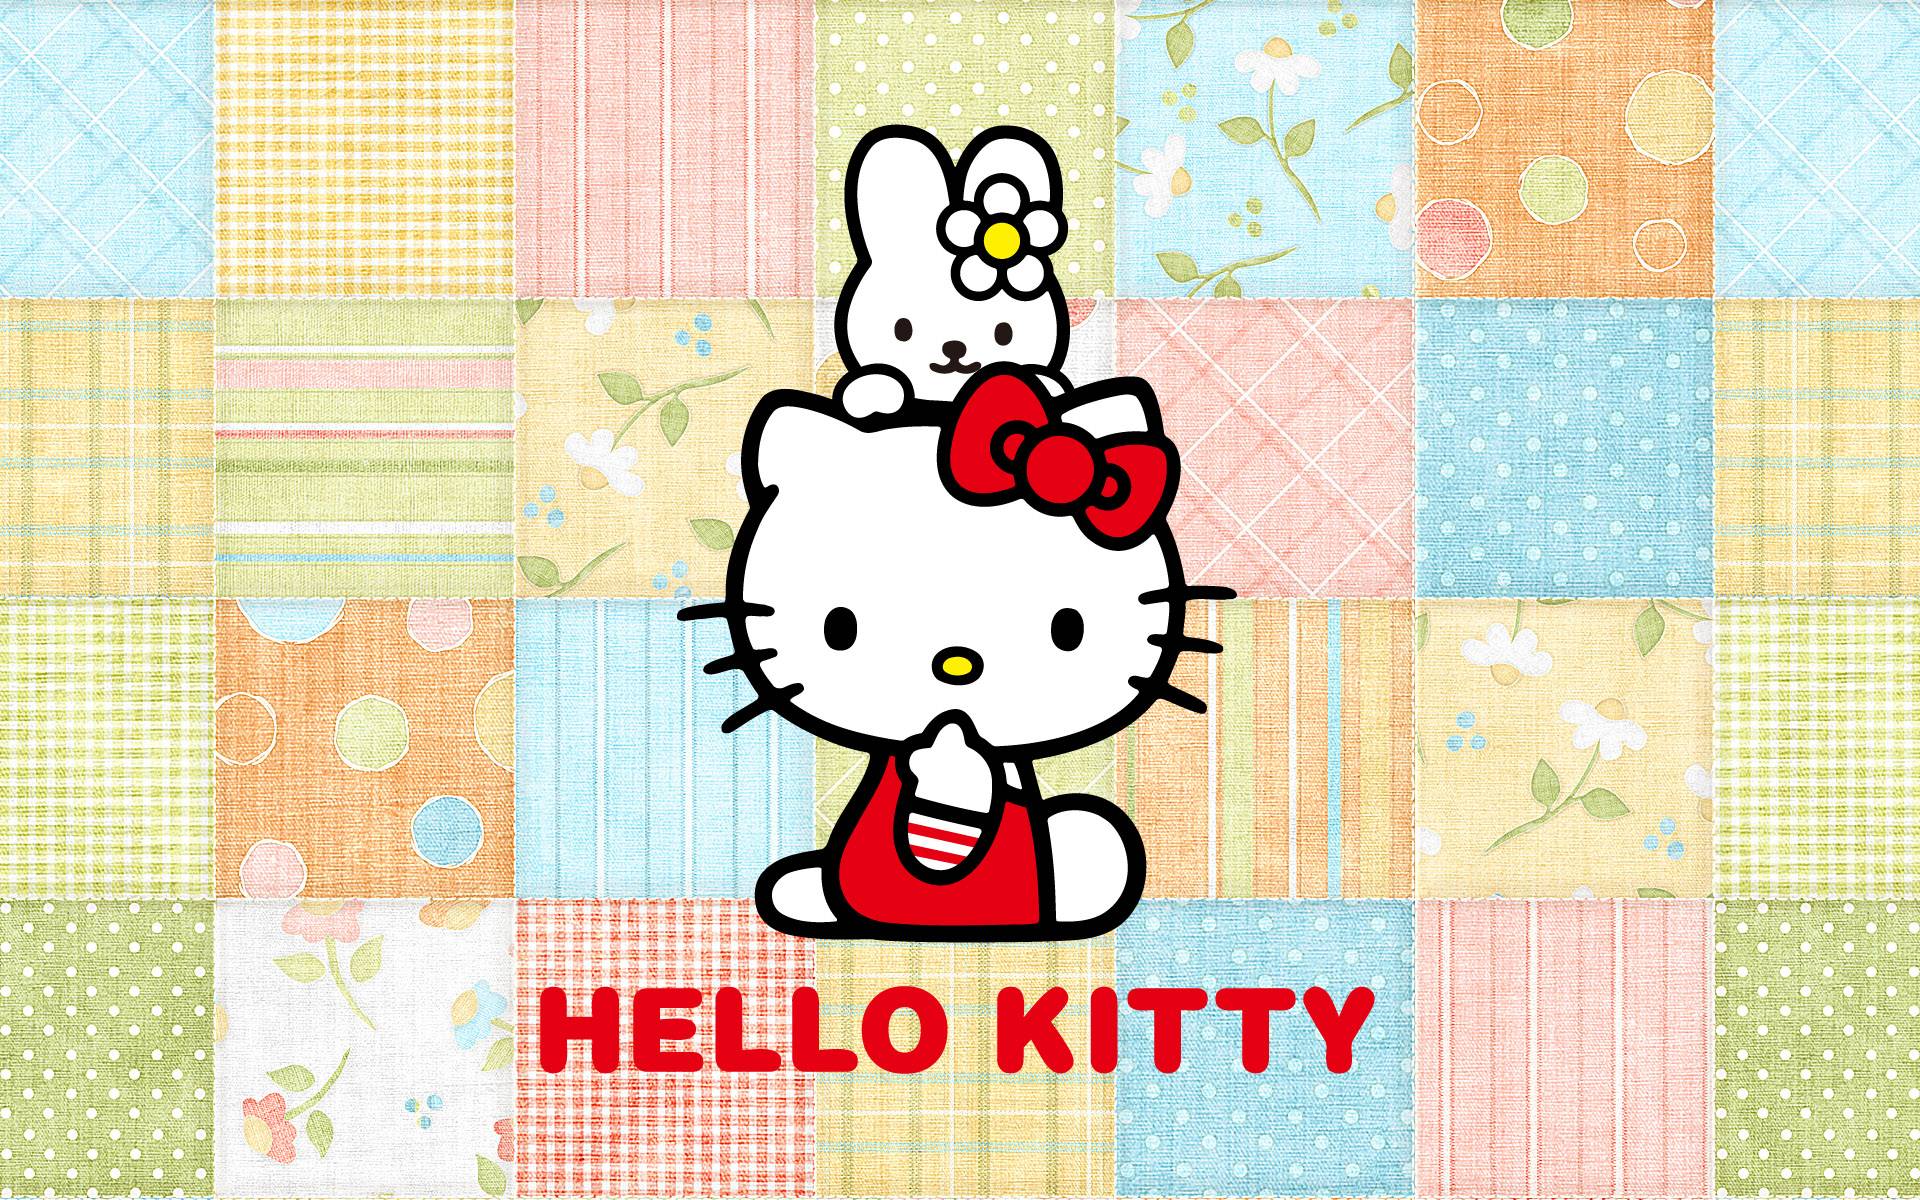 Hello Kitty Wallpaper For Computer: Hello Kitty Desktop Wallpaper